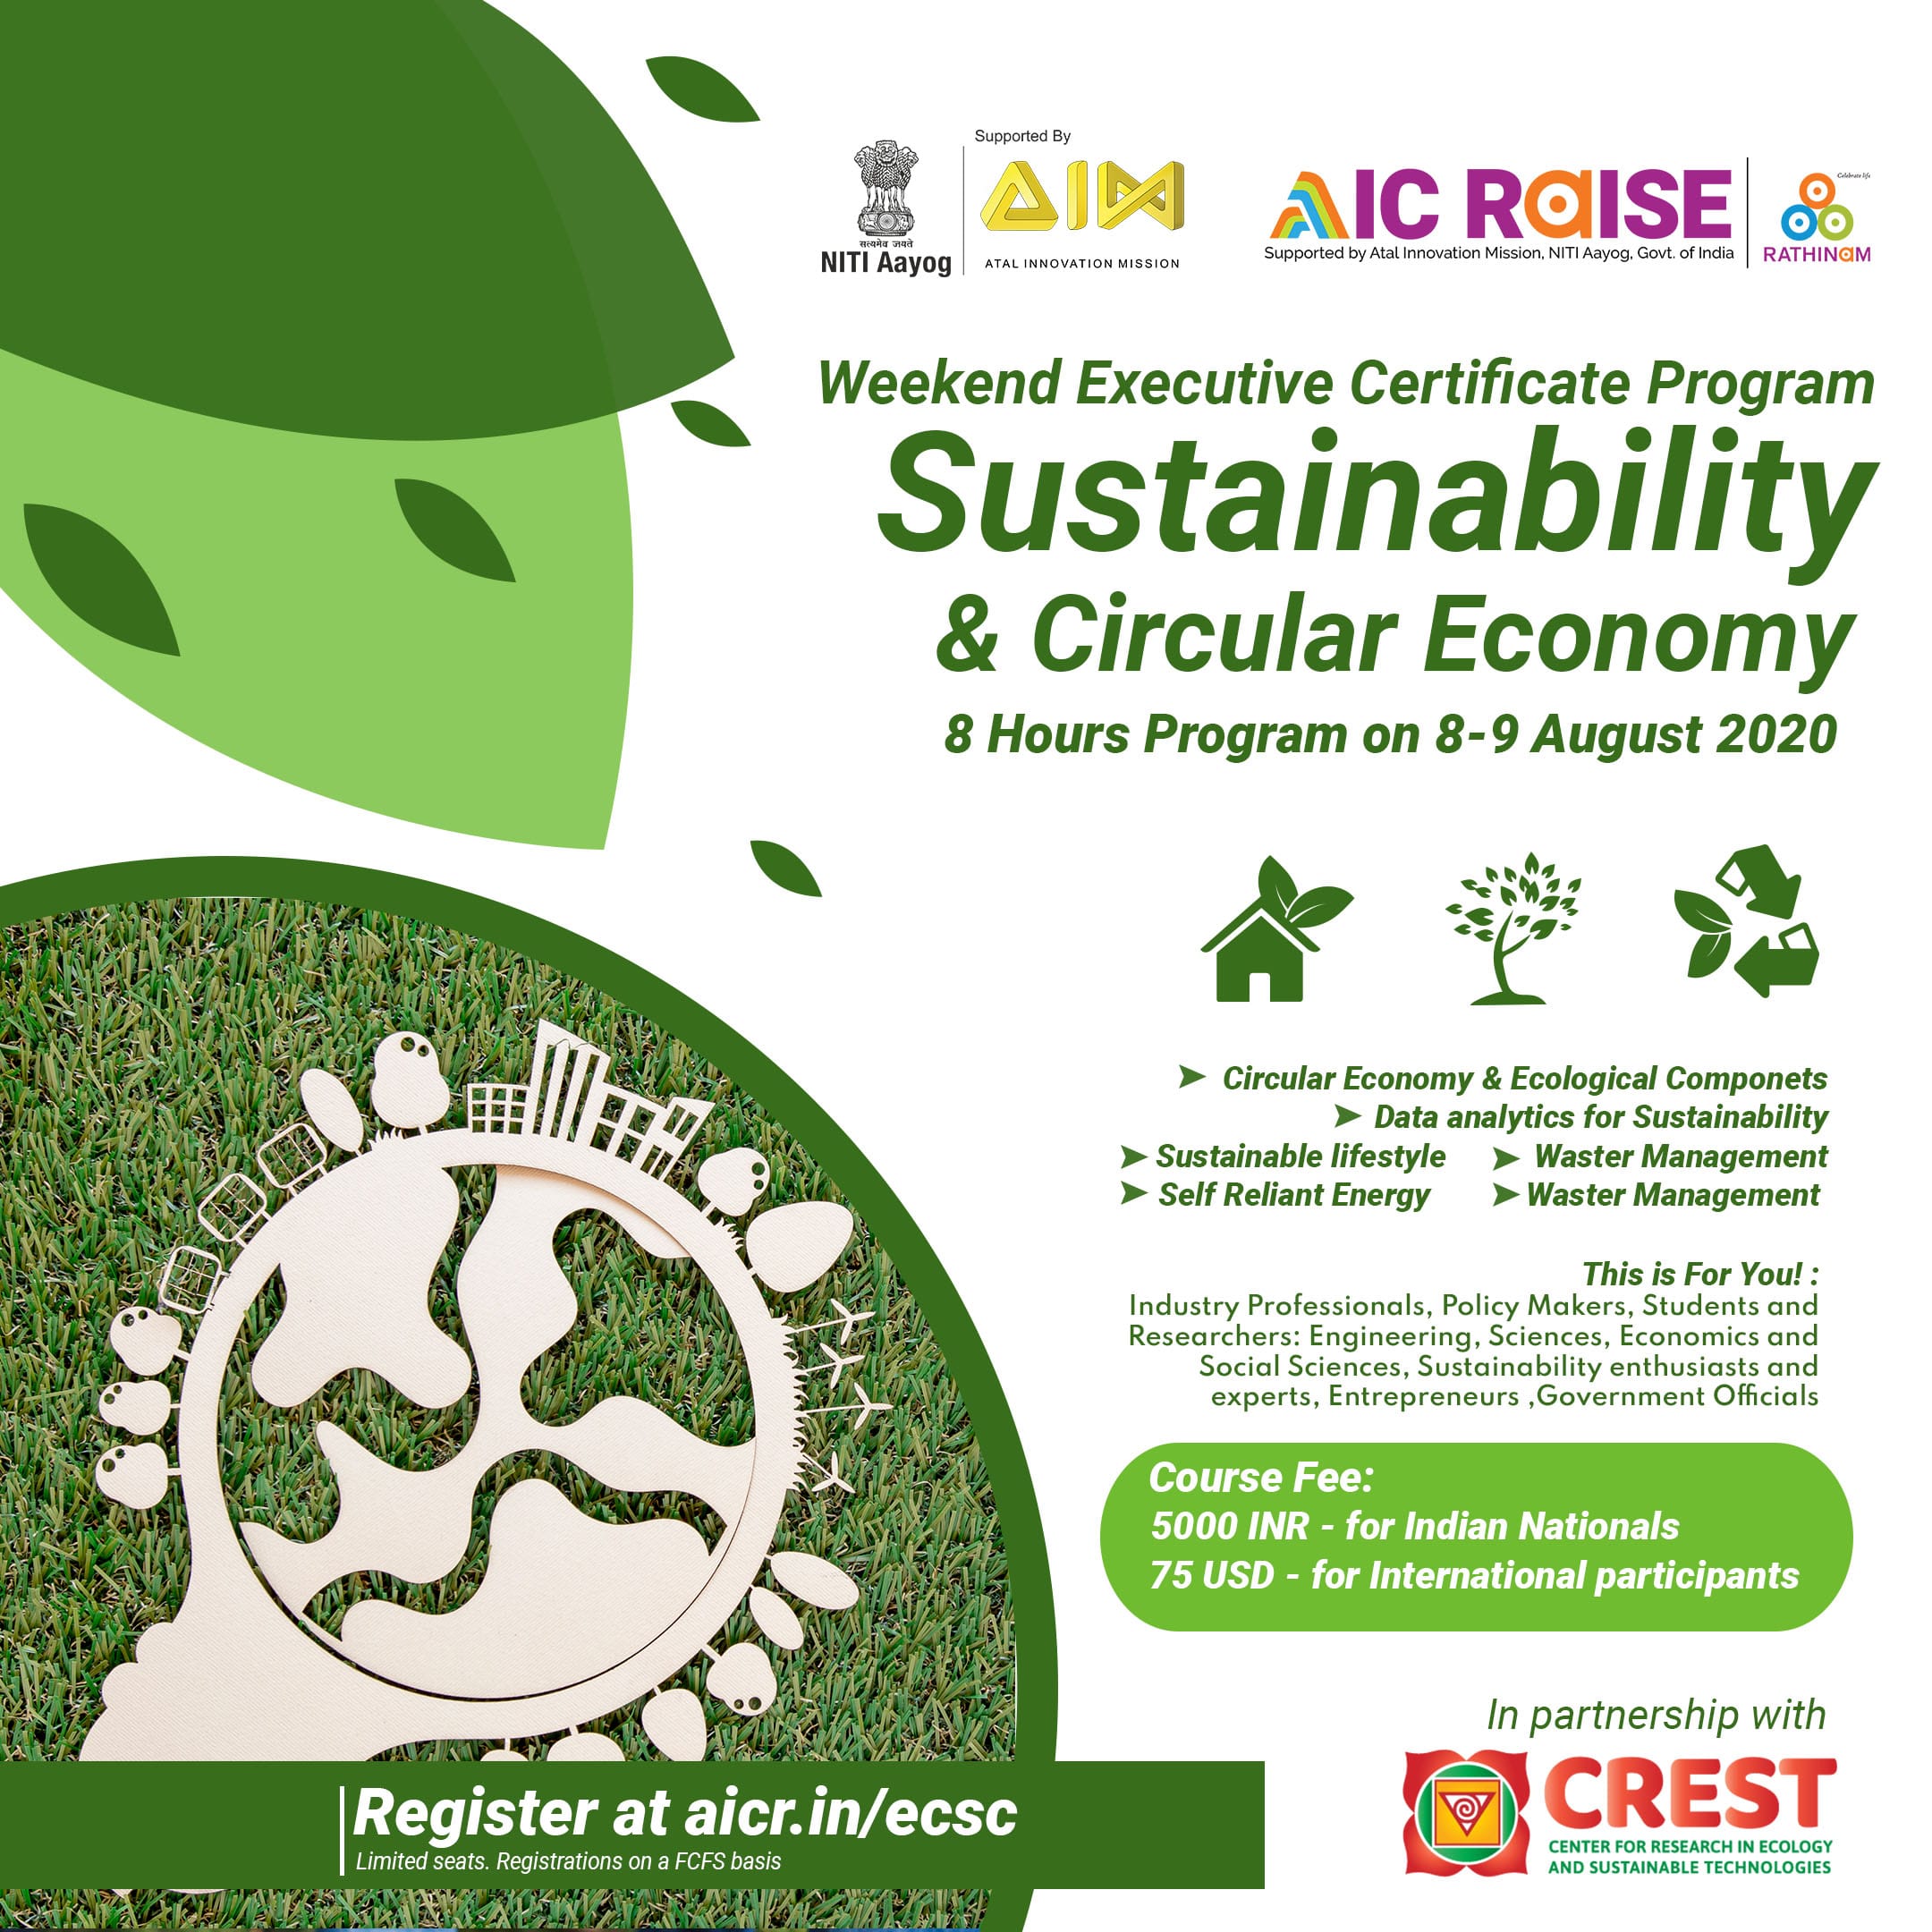 Weekend Executive Certificate Program Sustainability & Circular Economy